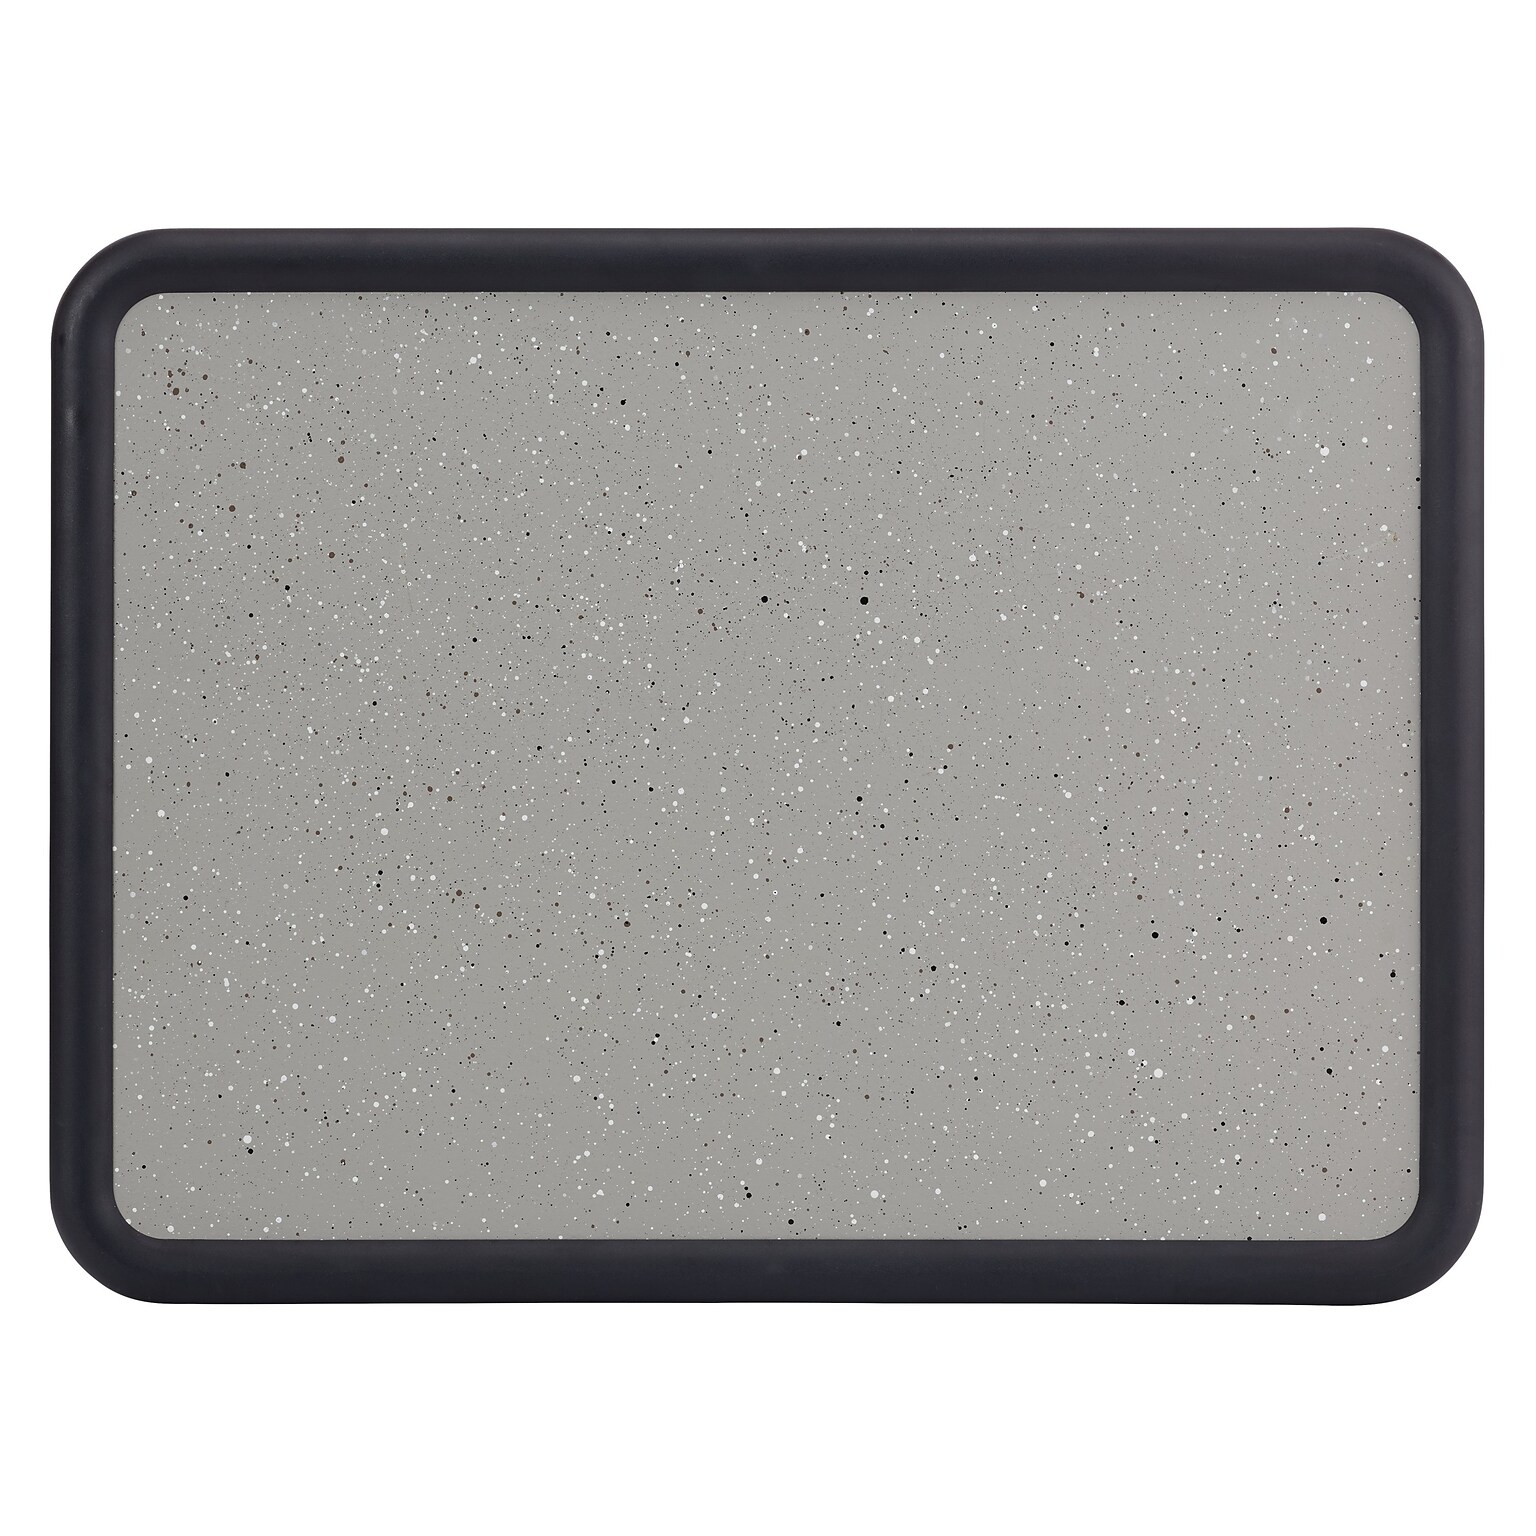 Quartet Contour Granite Bulletin Board, Black Frame, 3H x 4W (699375)